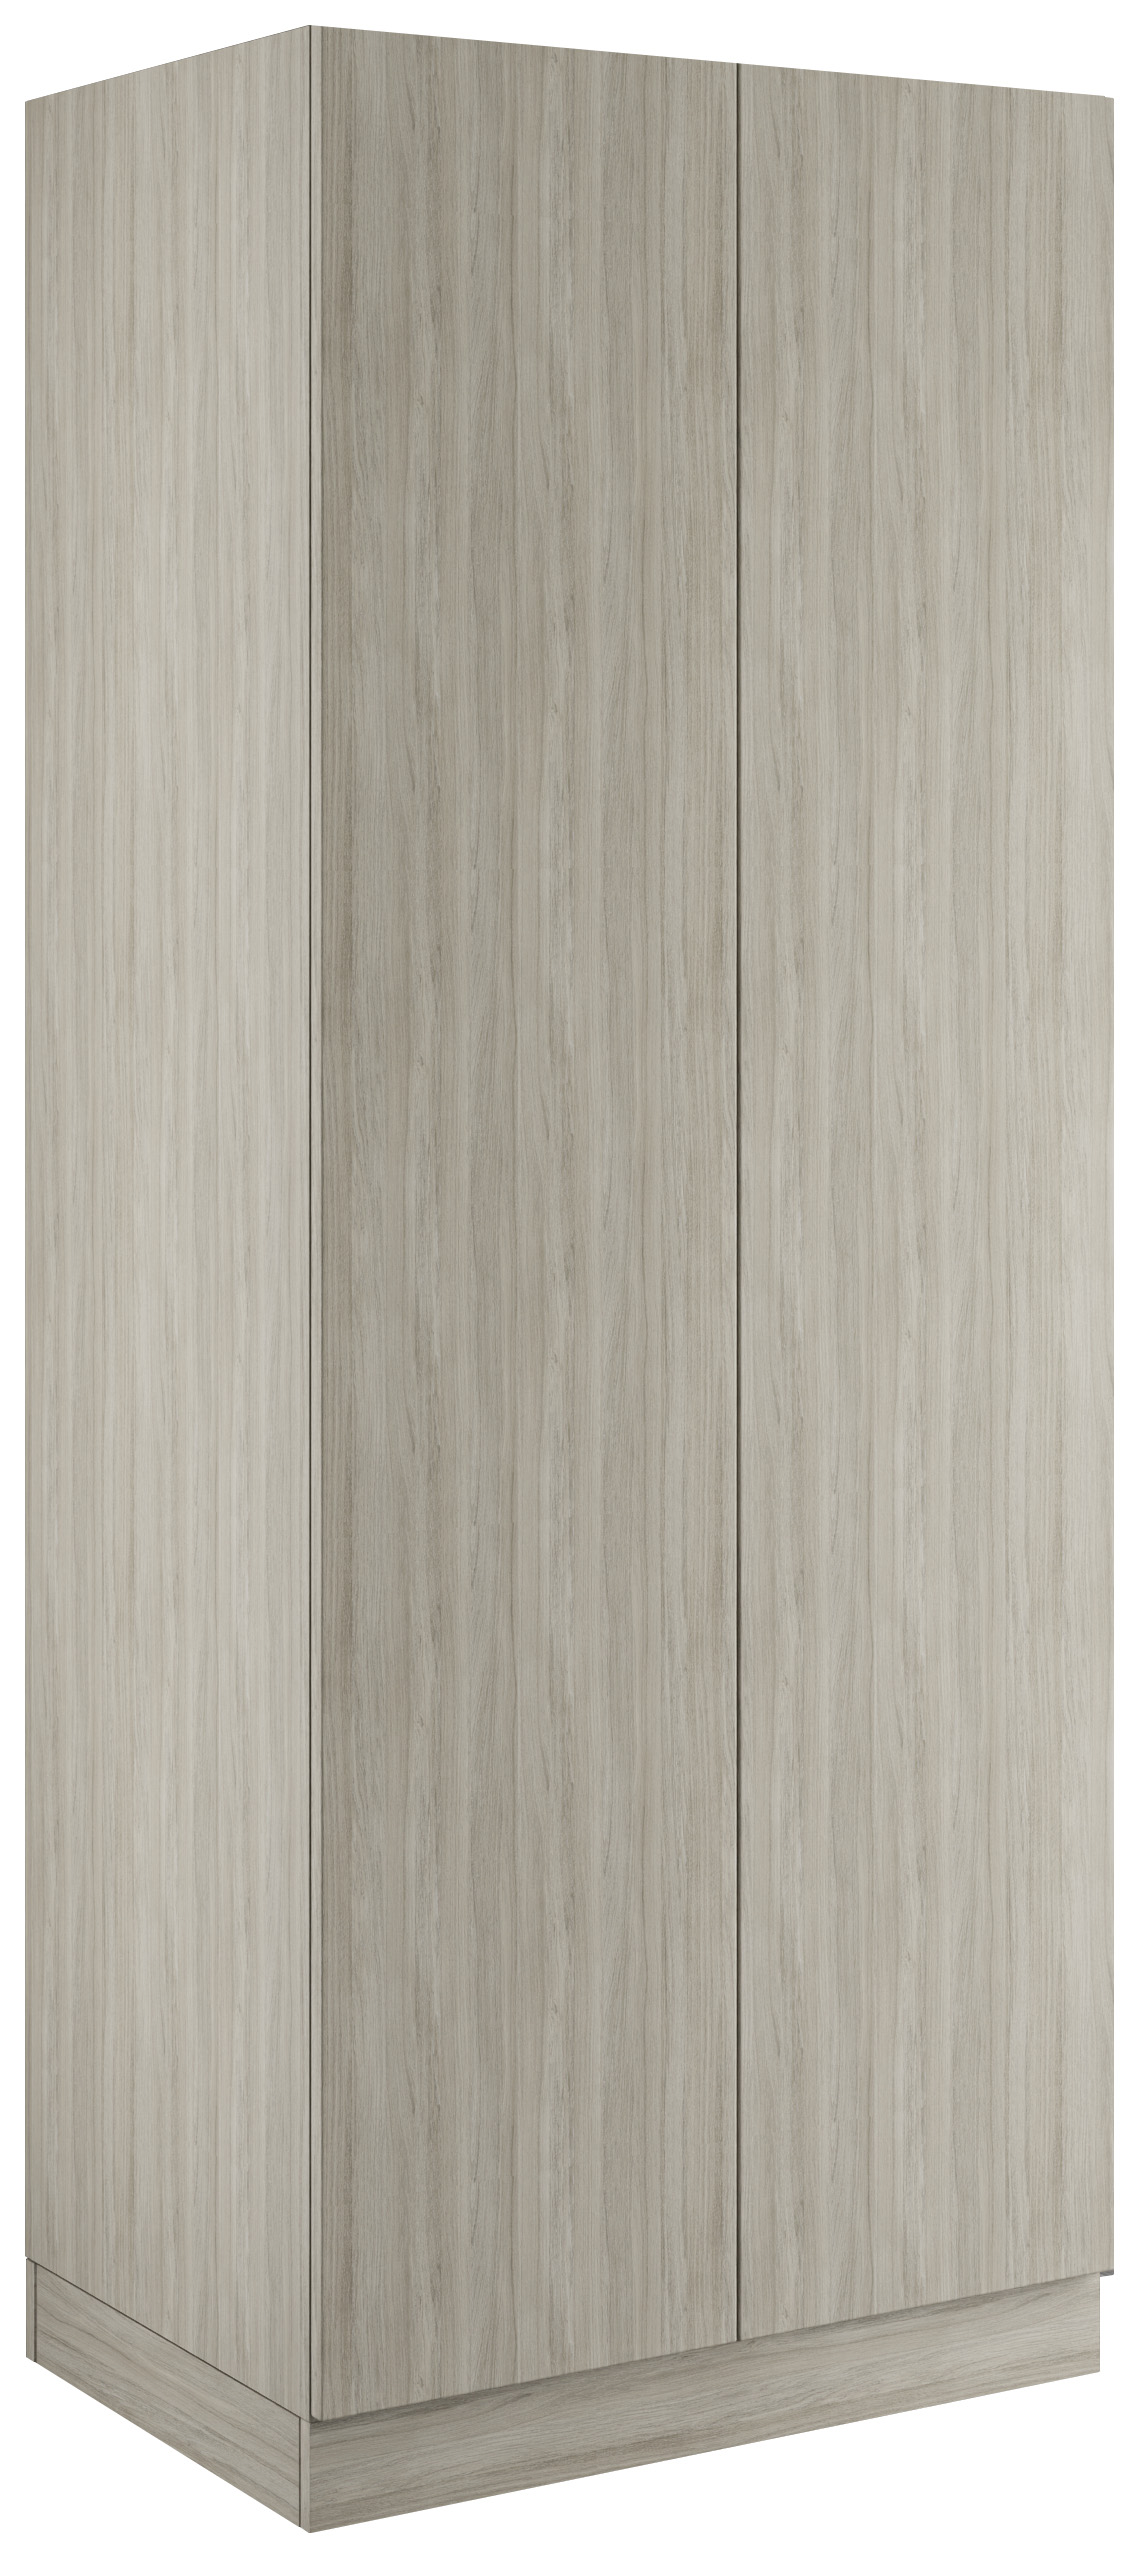 Malton Urban Oak Double Wardrobe with Shelves - 900 x 2260 x 608mm